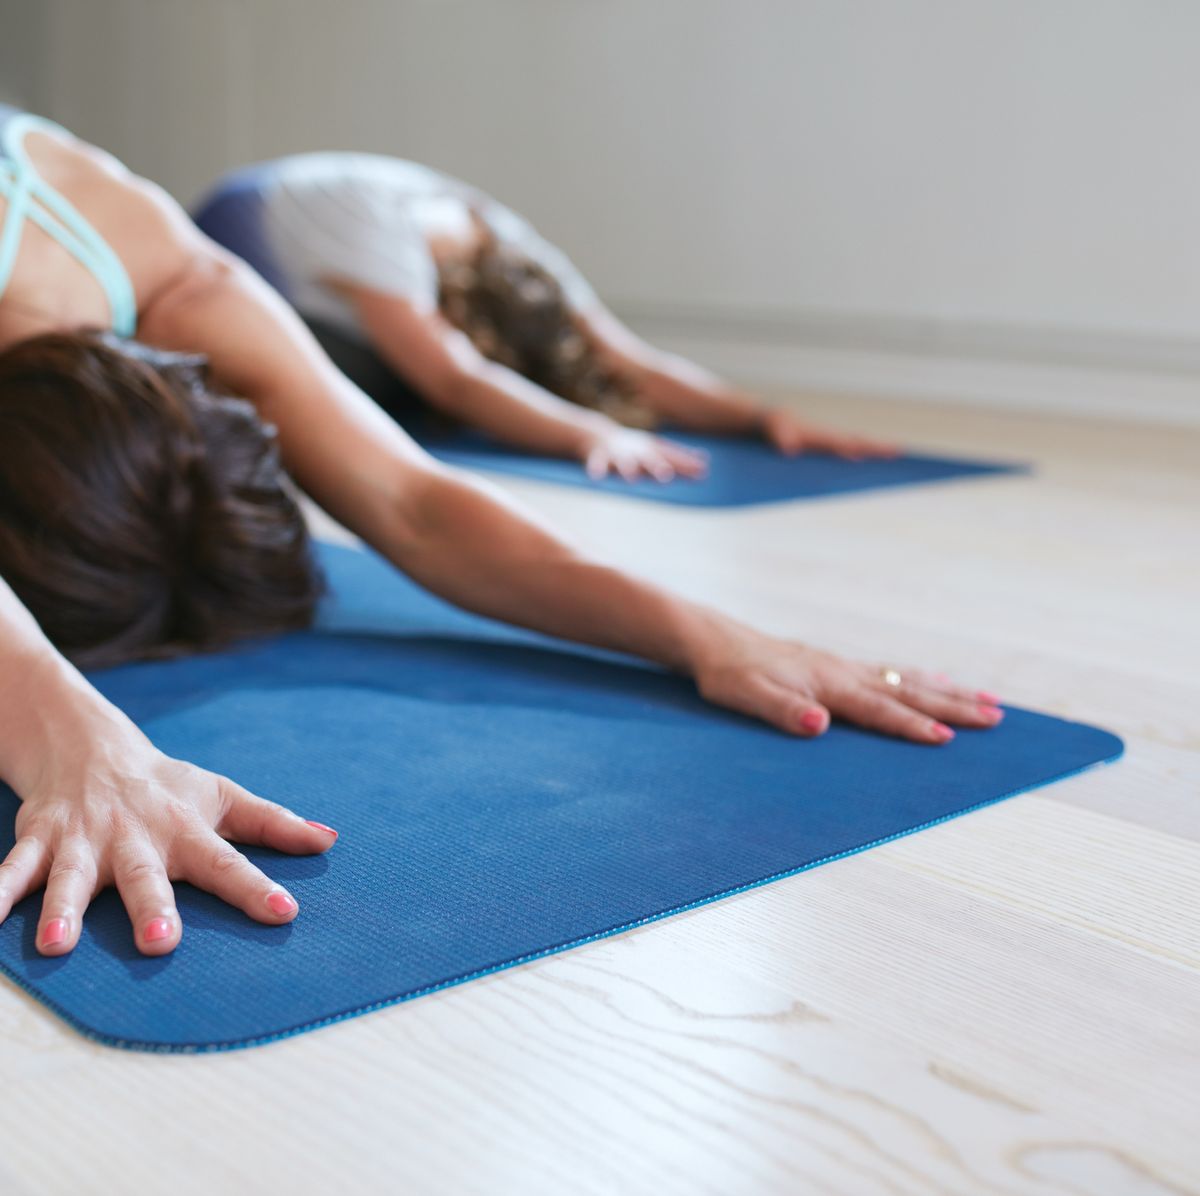 Benefits Of Hot Yoga Vs Regular Yoga For Body And Mind